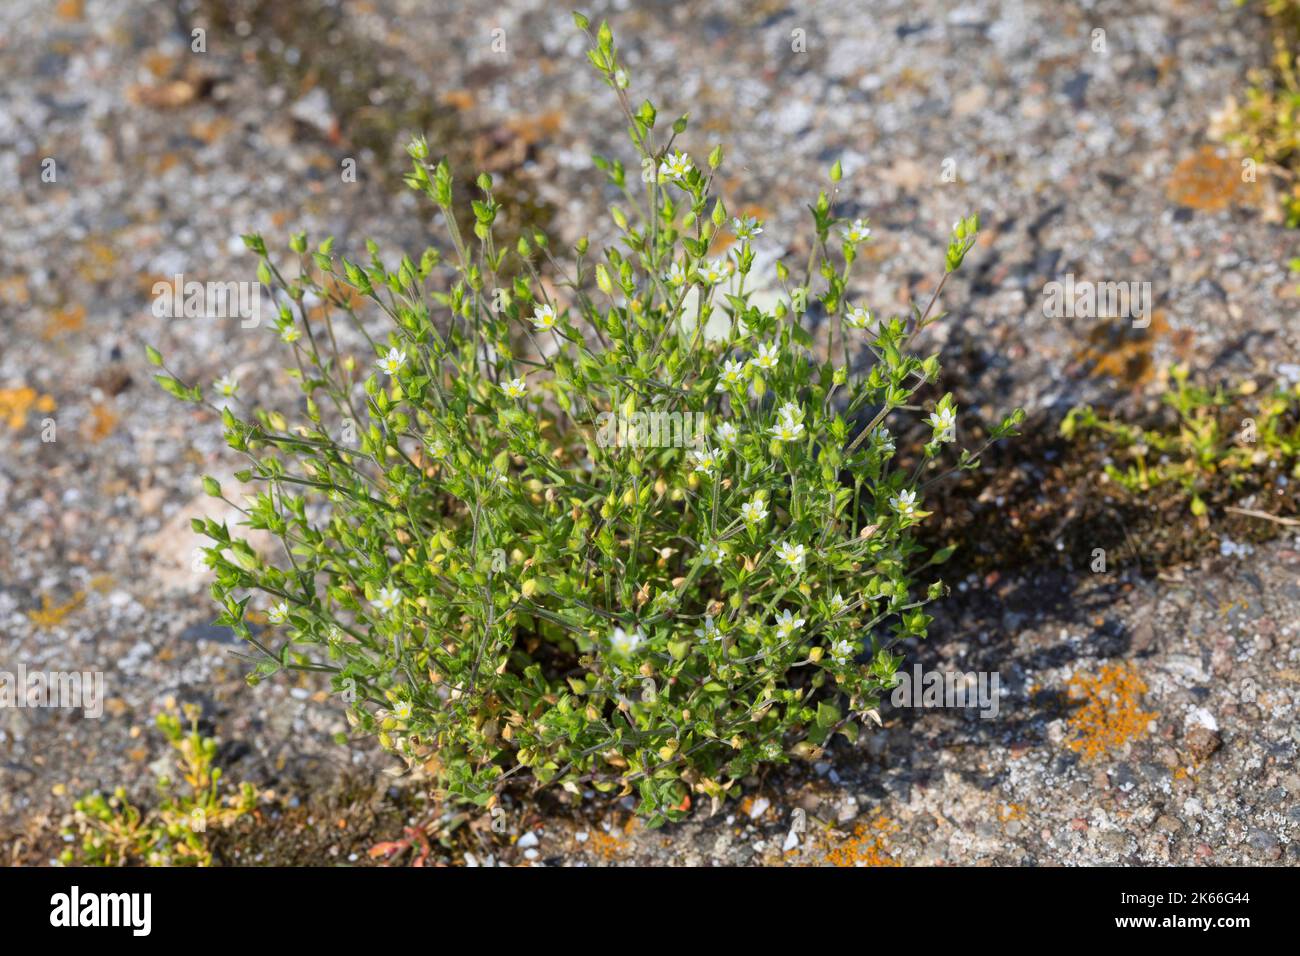 thyme-leaved sandwort, thyme-leaf sandwort (Arenaria serpyllifolia), grows in paving gaps, Germany Stock Photo